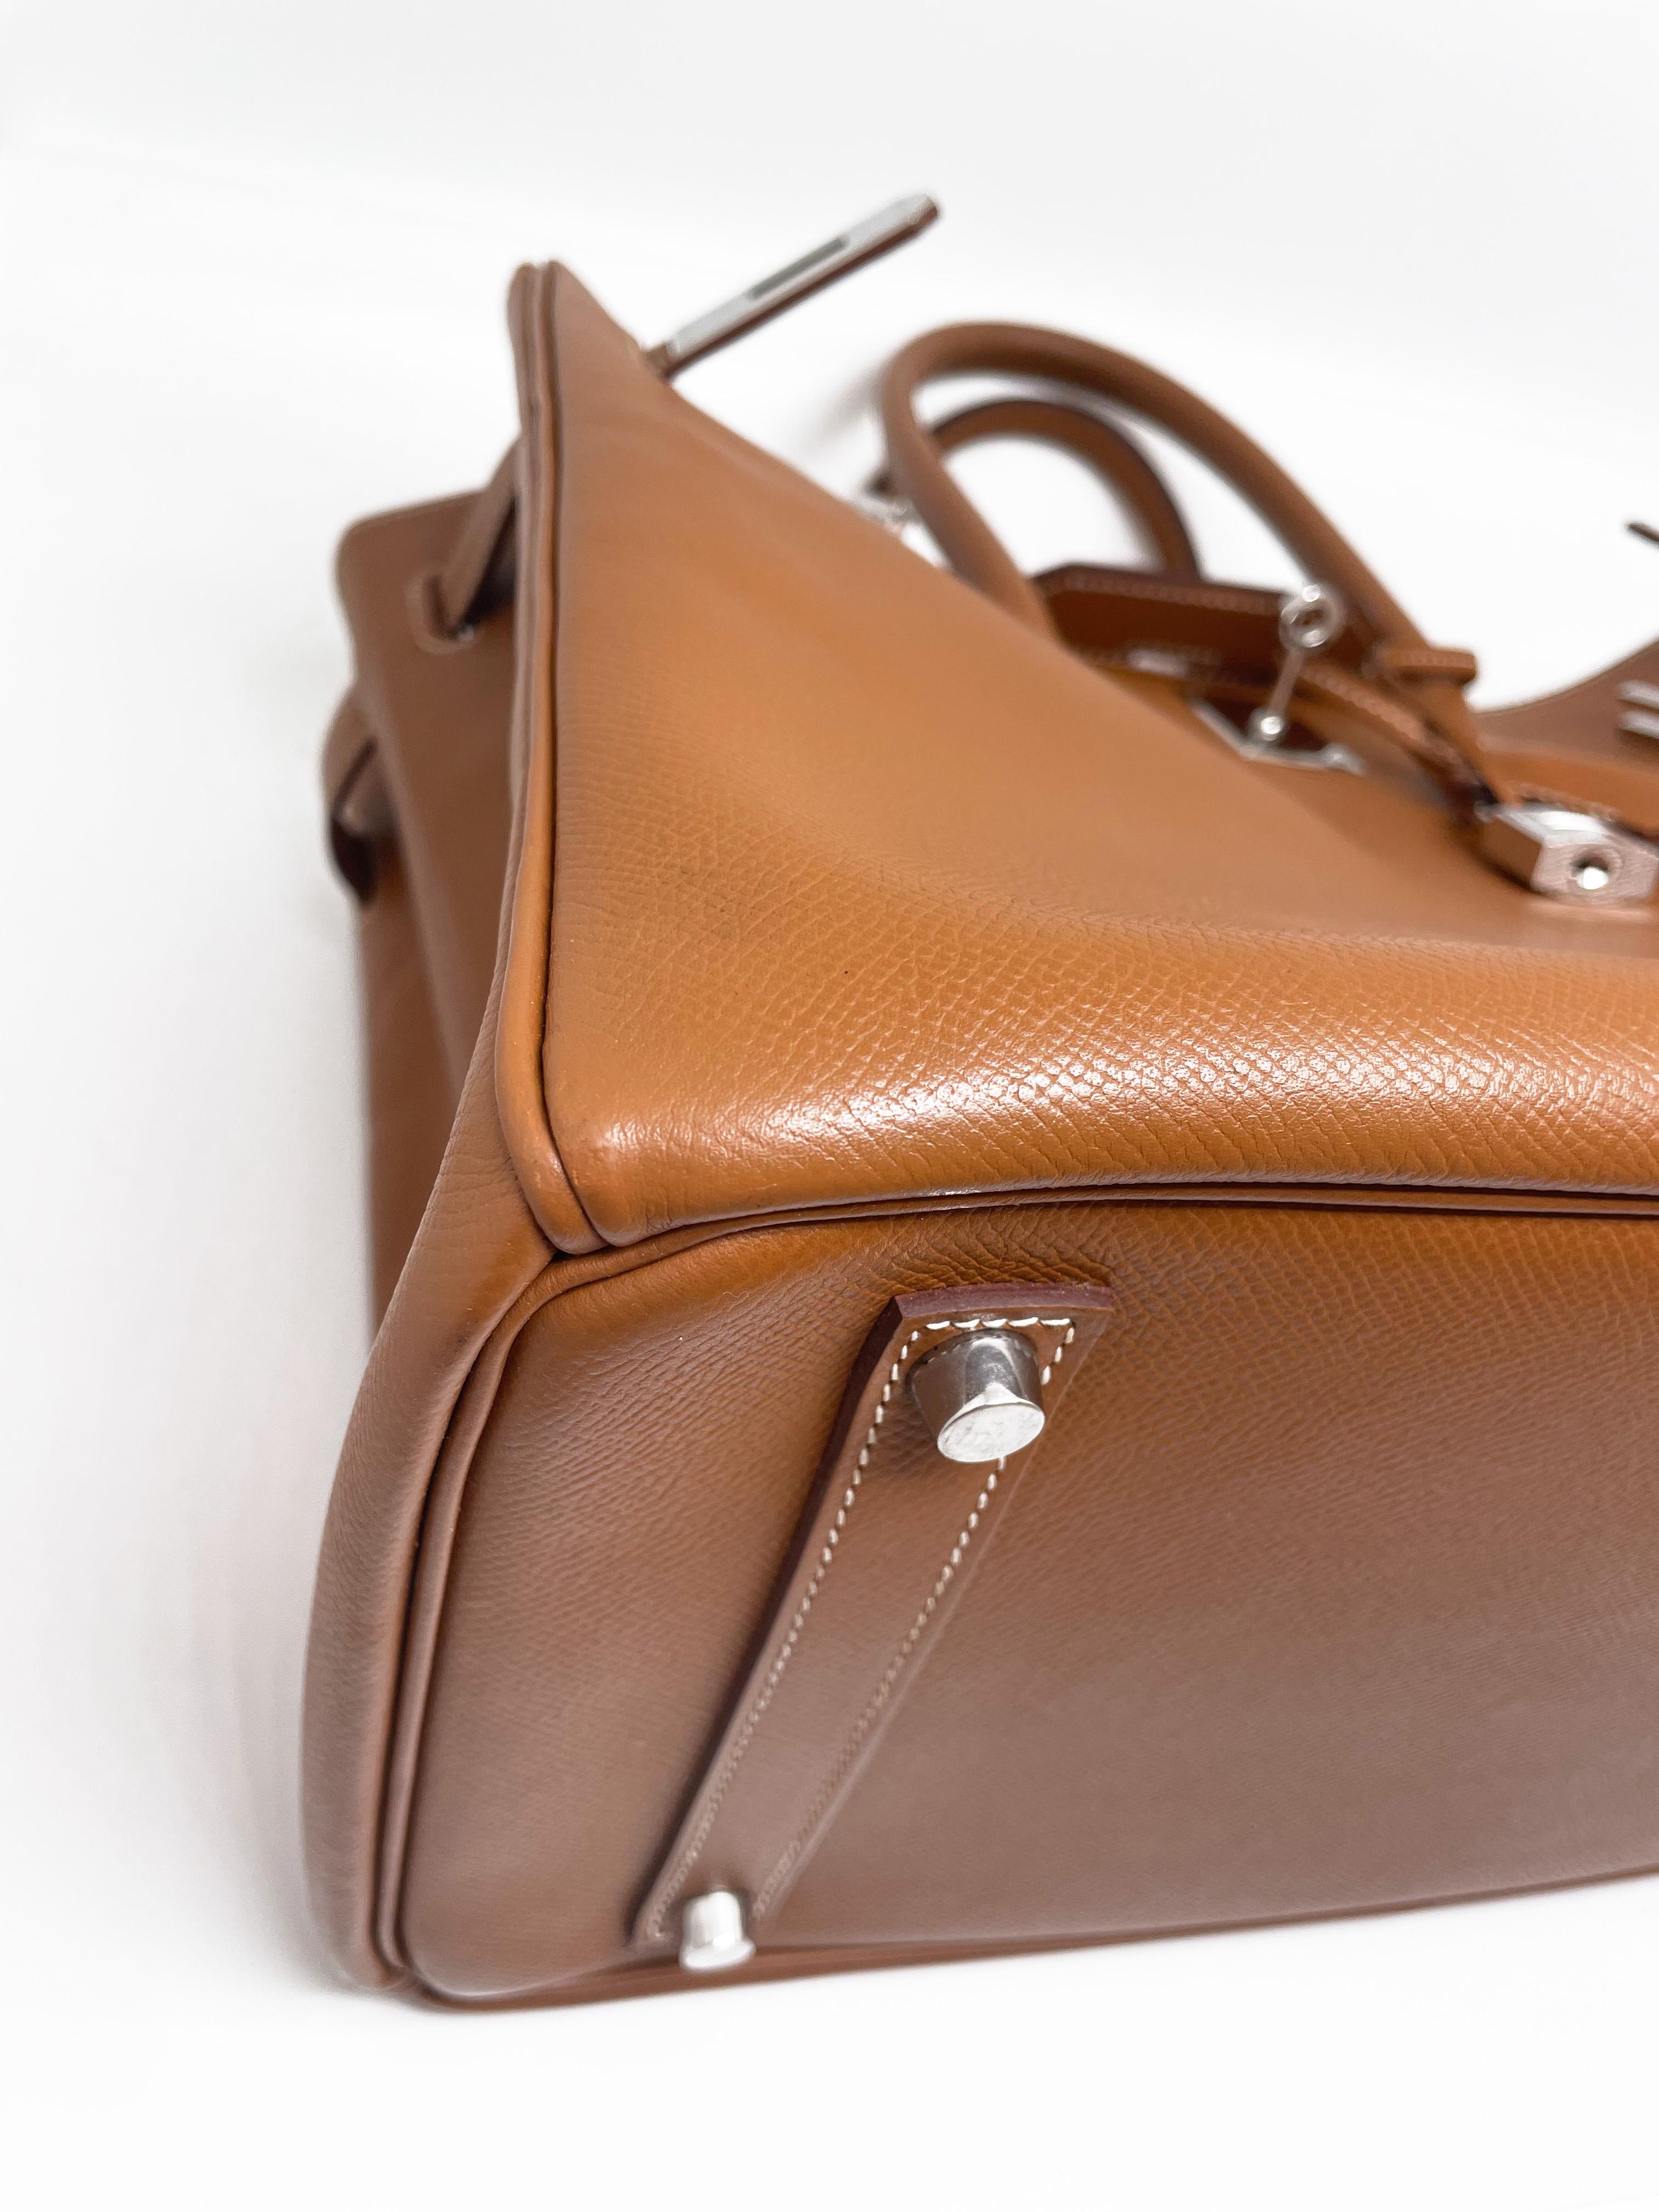 Hermès Birkin 35 Gold handbag in Espom leather and white stitching 3